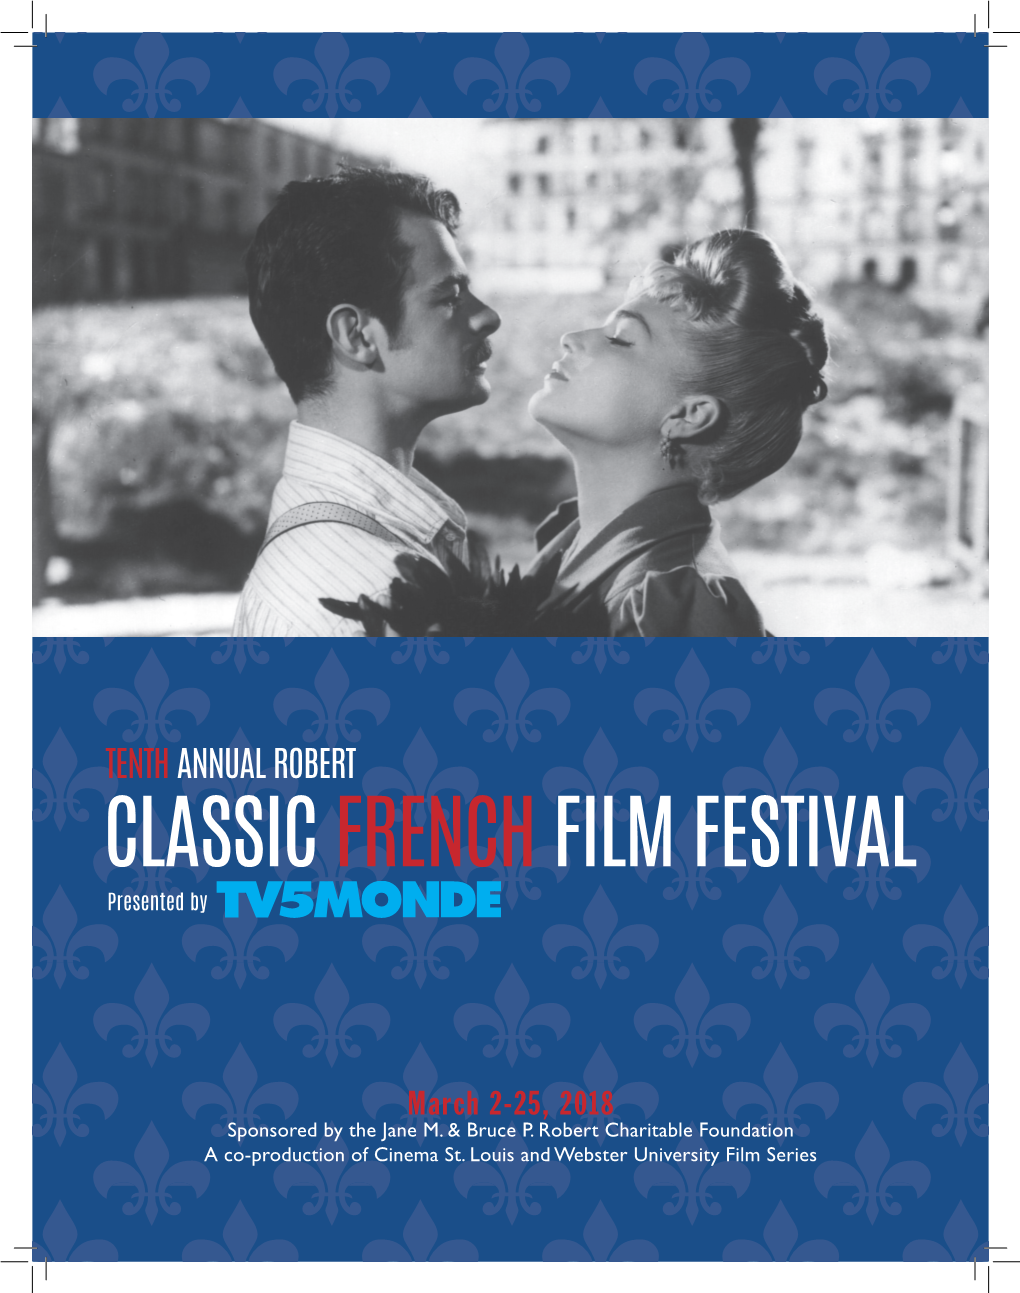 Classic French Film Festival 2018